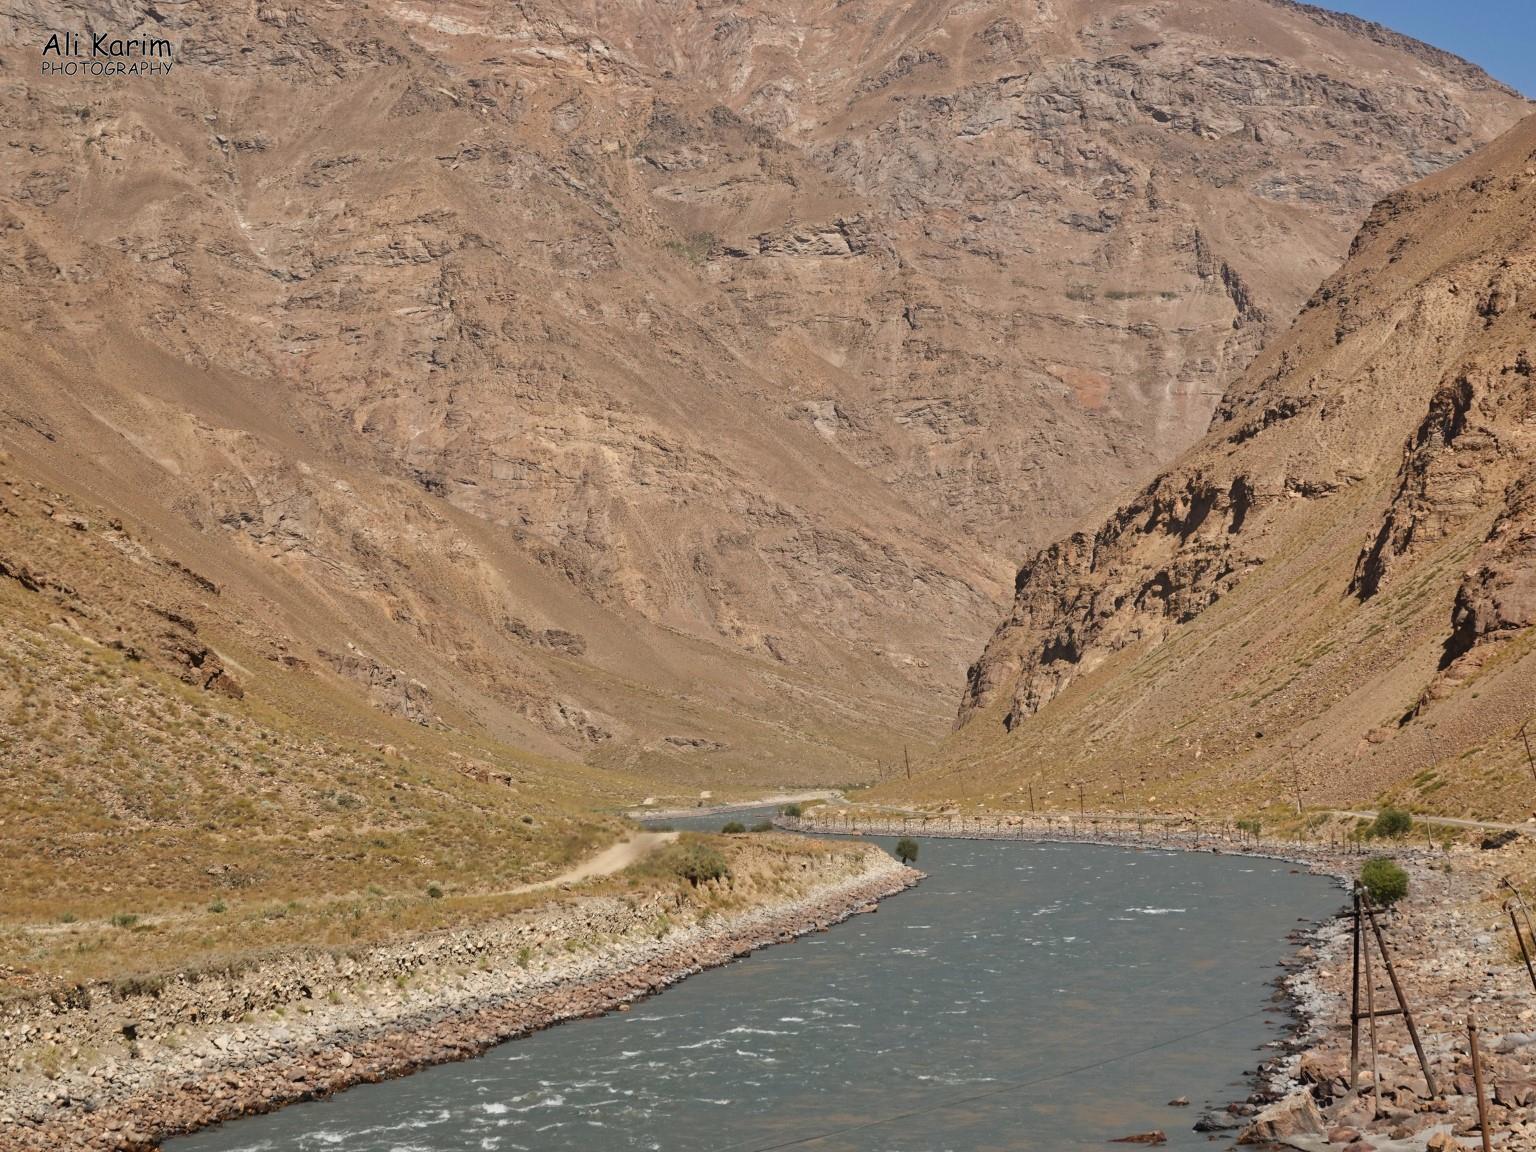 Onto Khorog, Tajikistan, Beautiful views of the Panj river & surrounding landscape in Tajikistan (right) and Afghanistan (left)